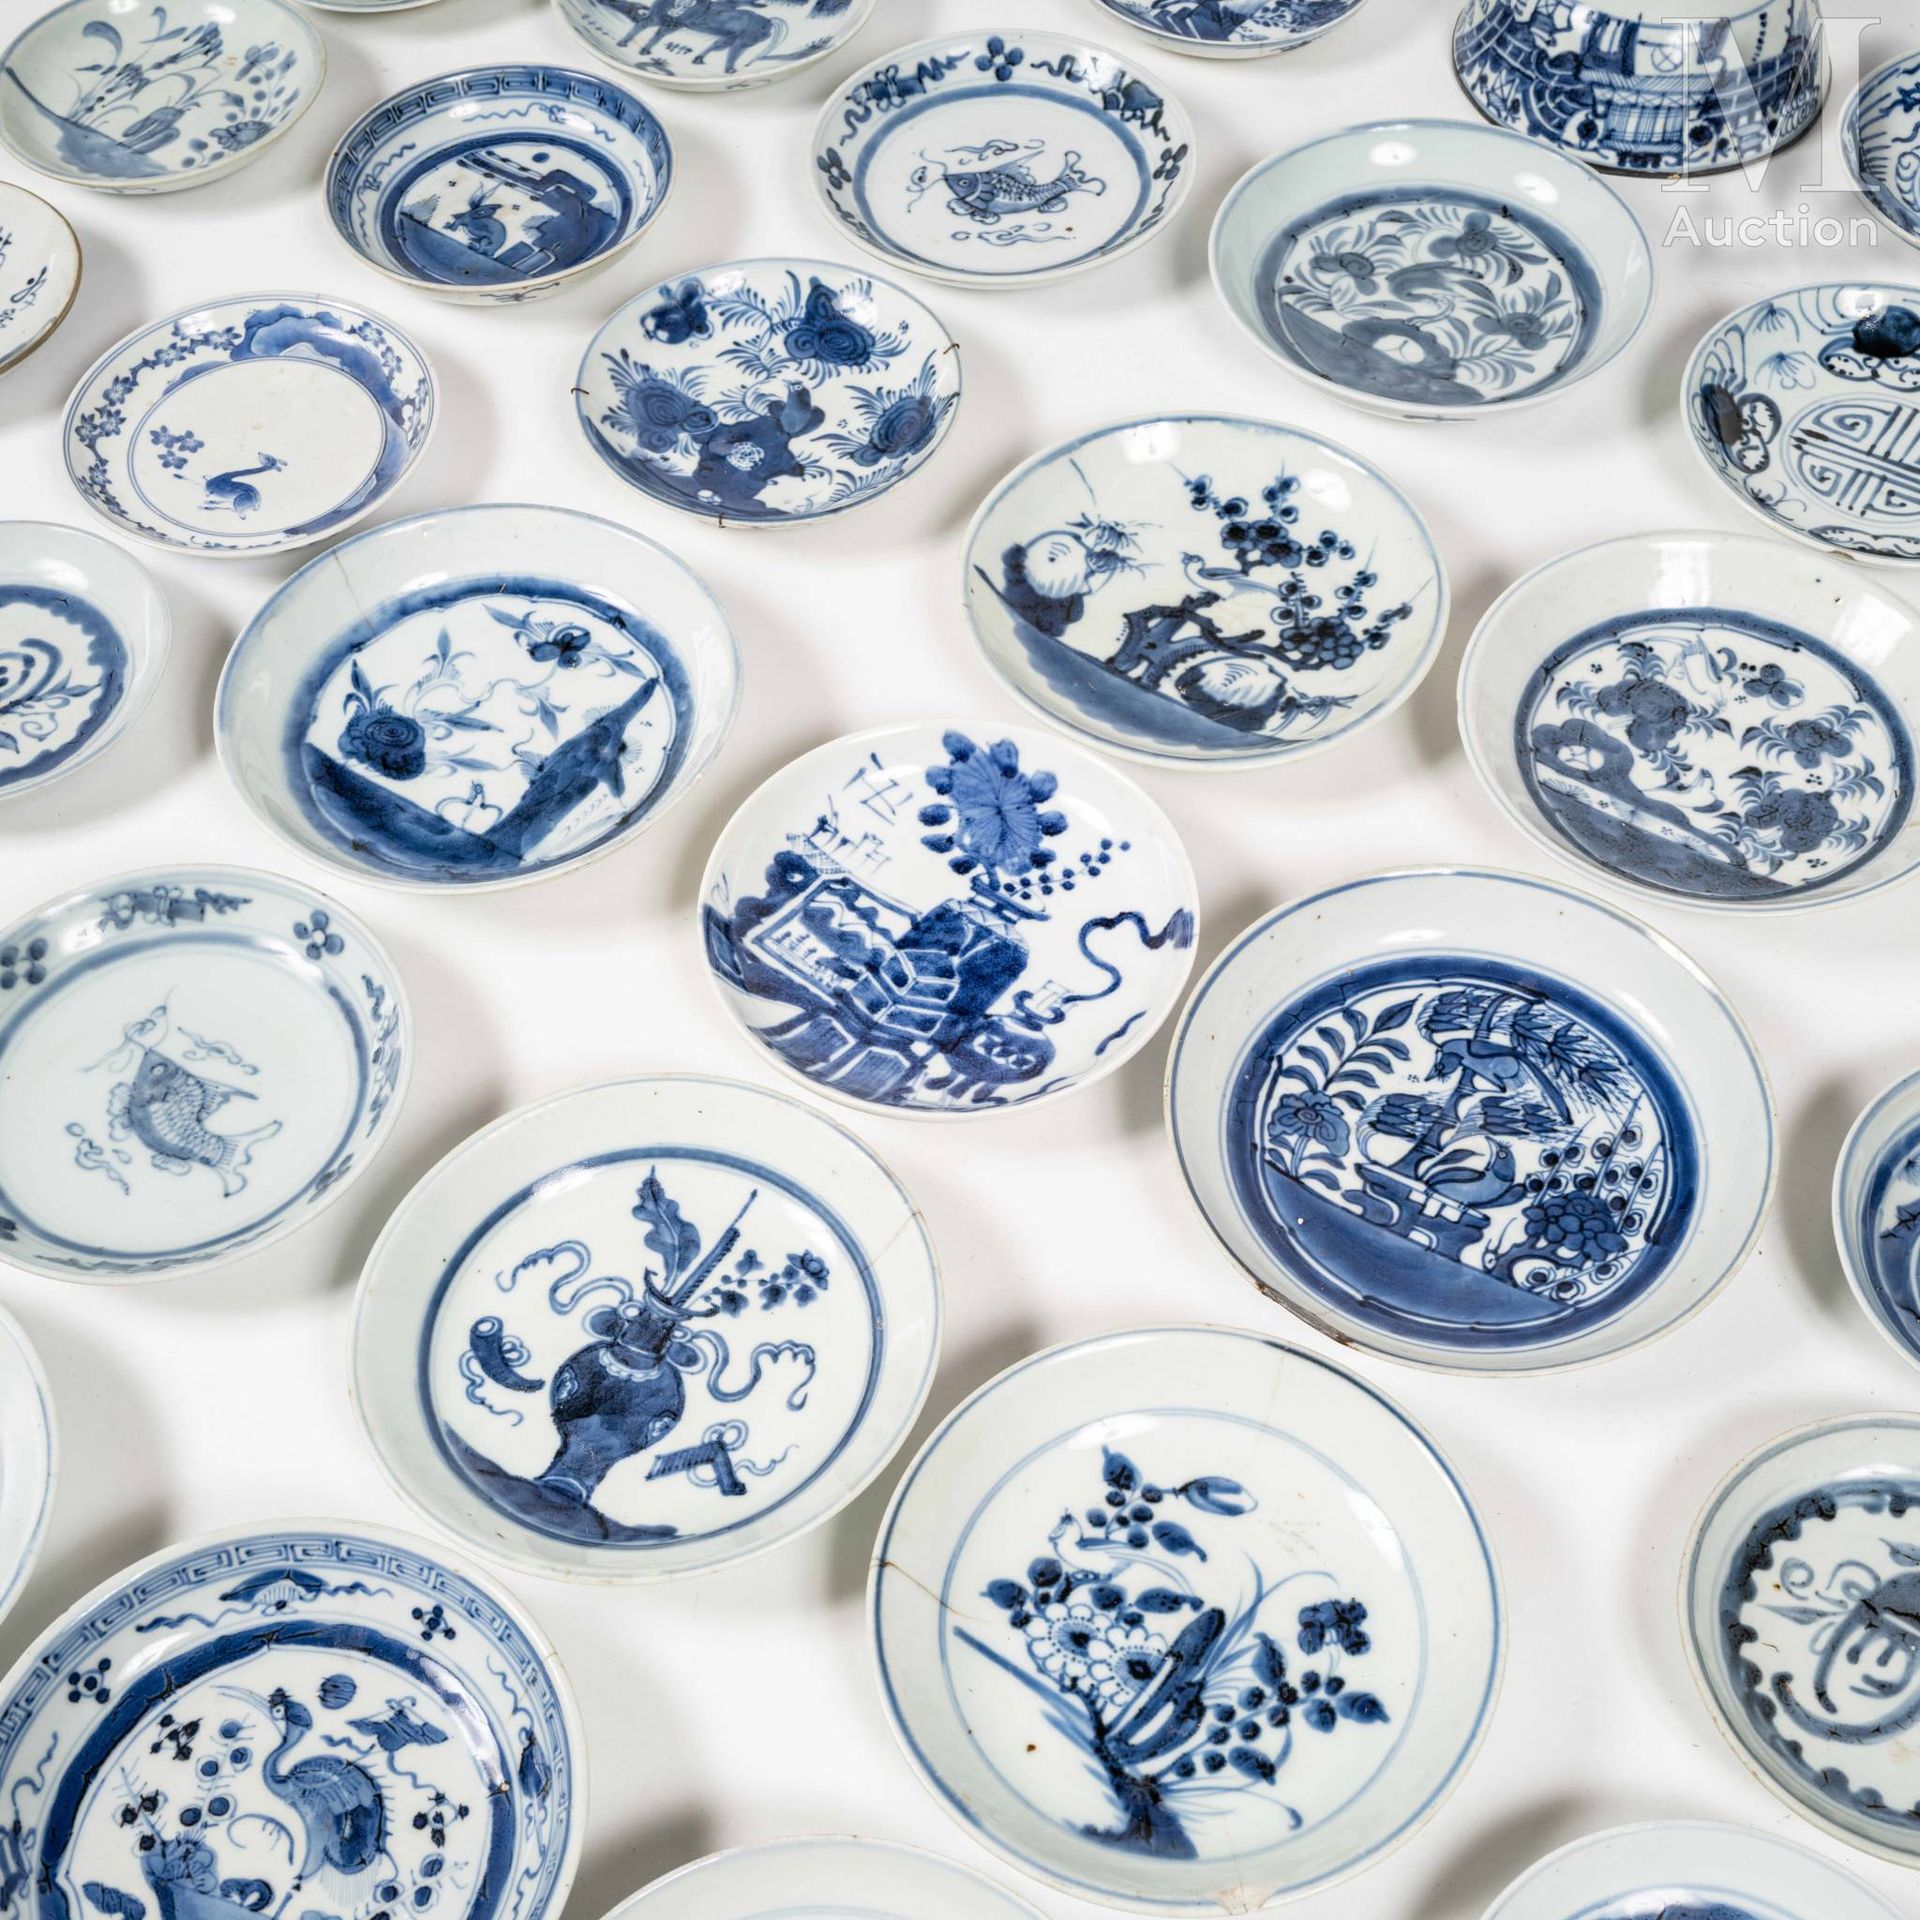 CHINE et VIETNAM, XIXe-XXe siècle 一套大型青花瓷盘和碗，上面装饰着各种场景。
按原样出售。